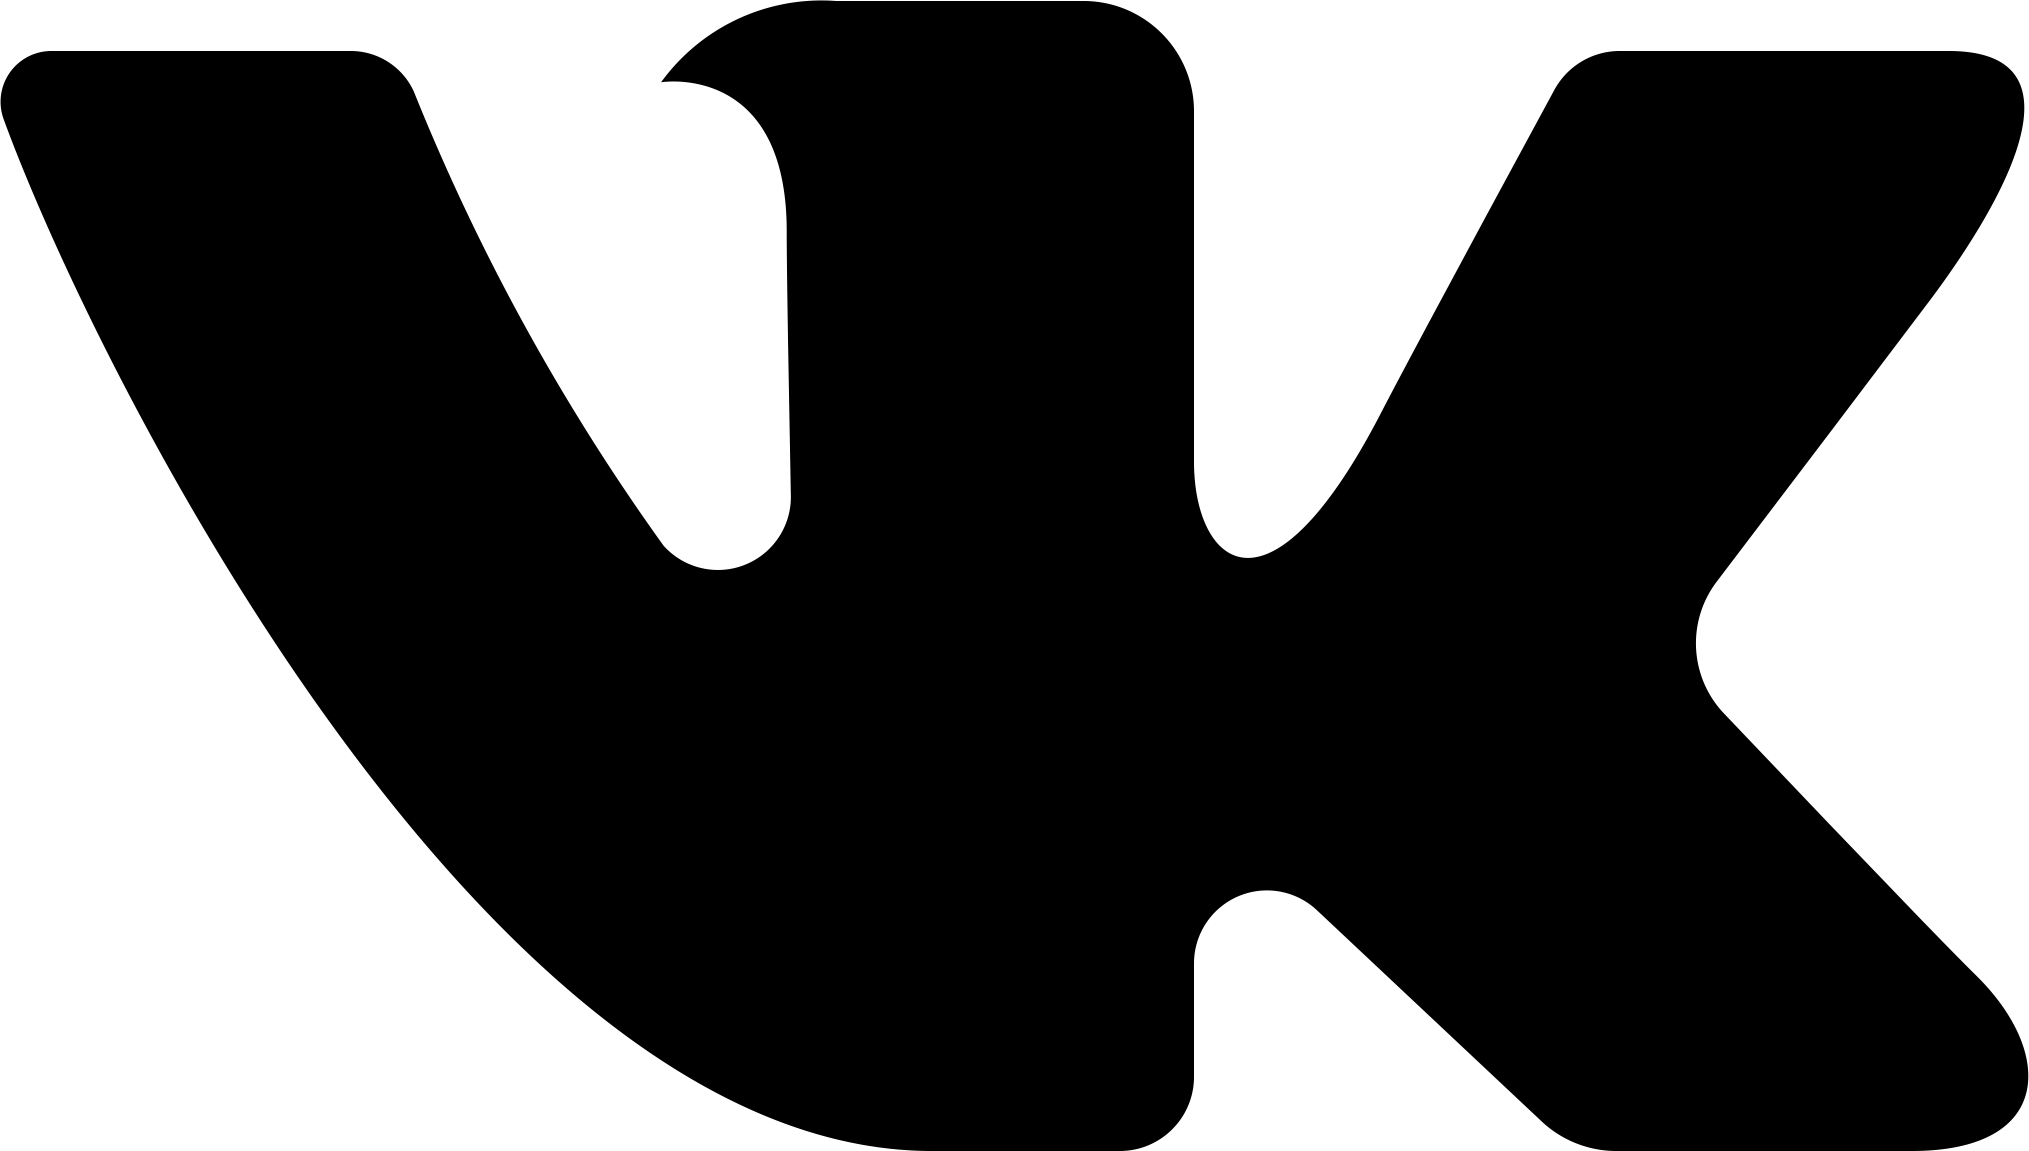 Актриса Роуз макгоуэн. Значок ВК. Значок Вики. OBK логотип. Karapari com